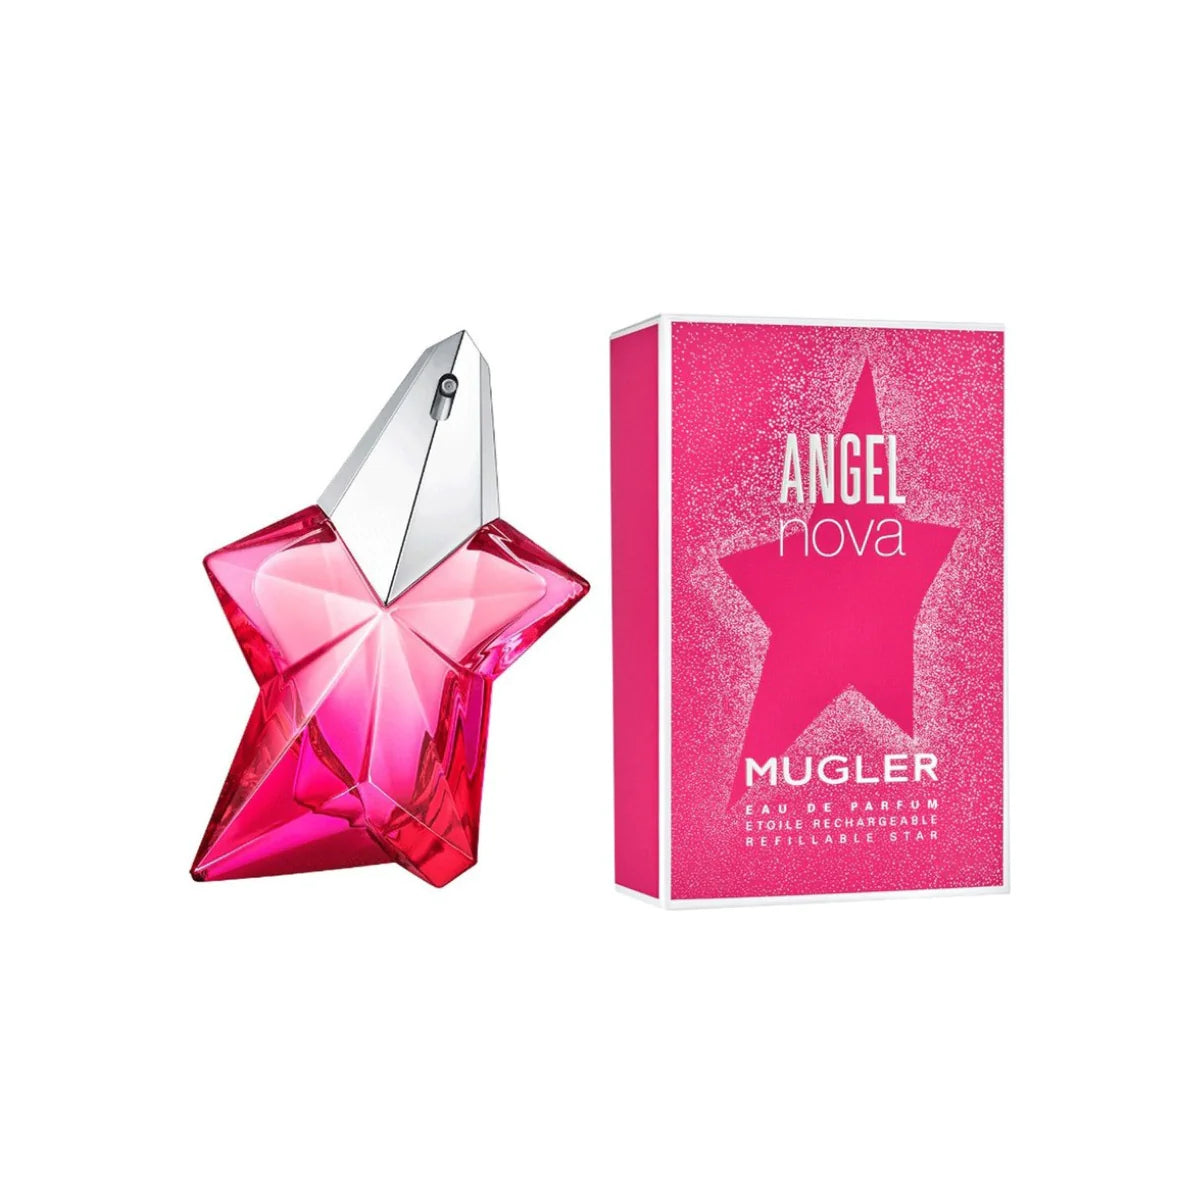 Mugler Angel Nova Eau De Parfum